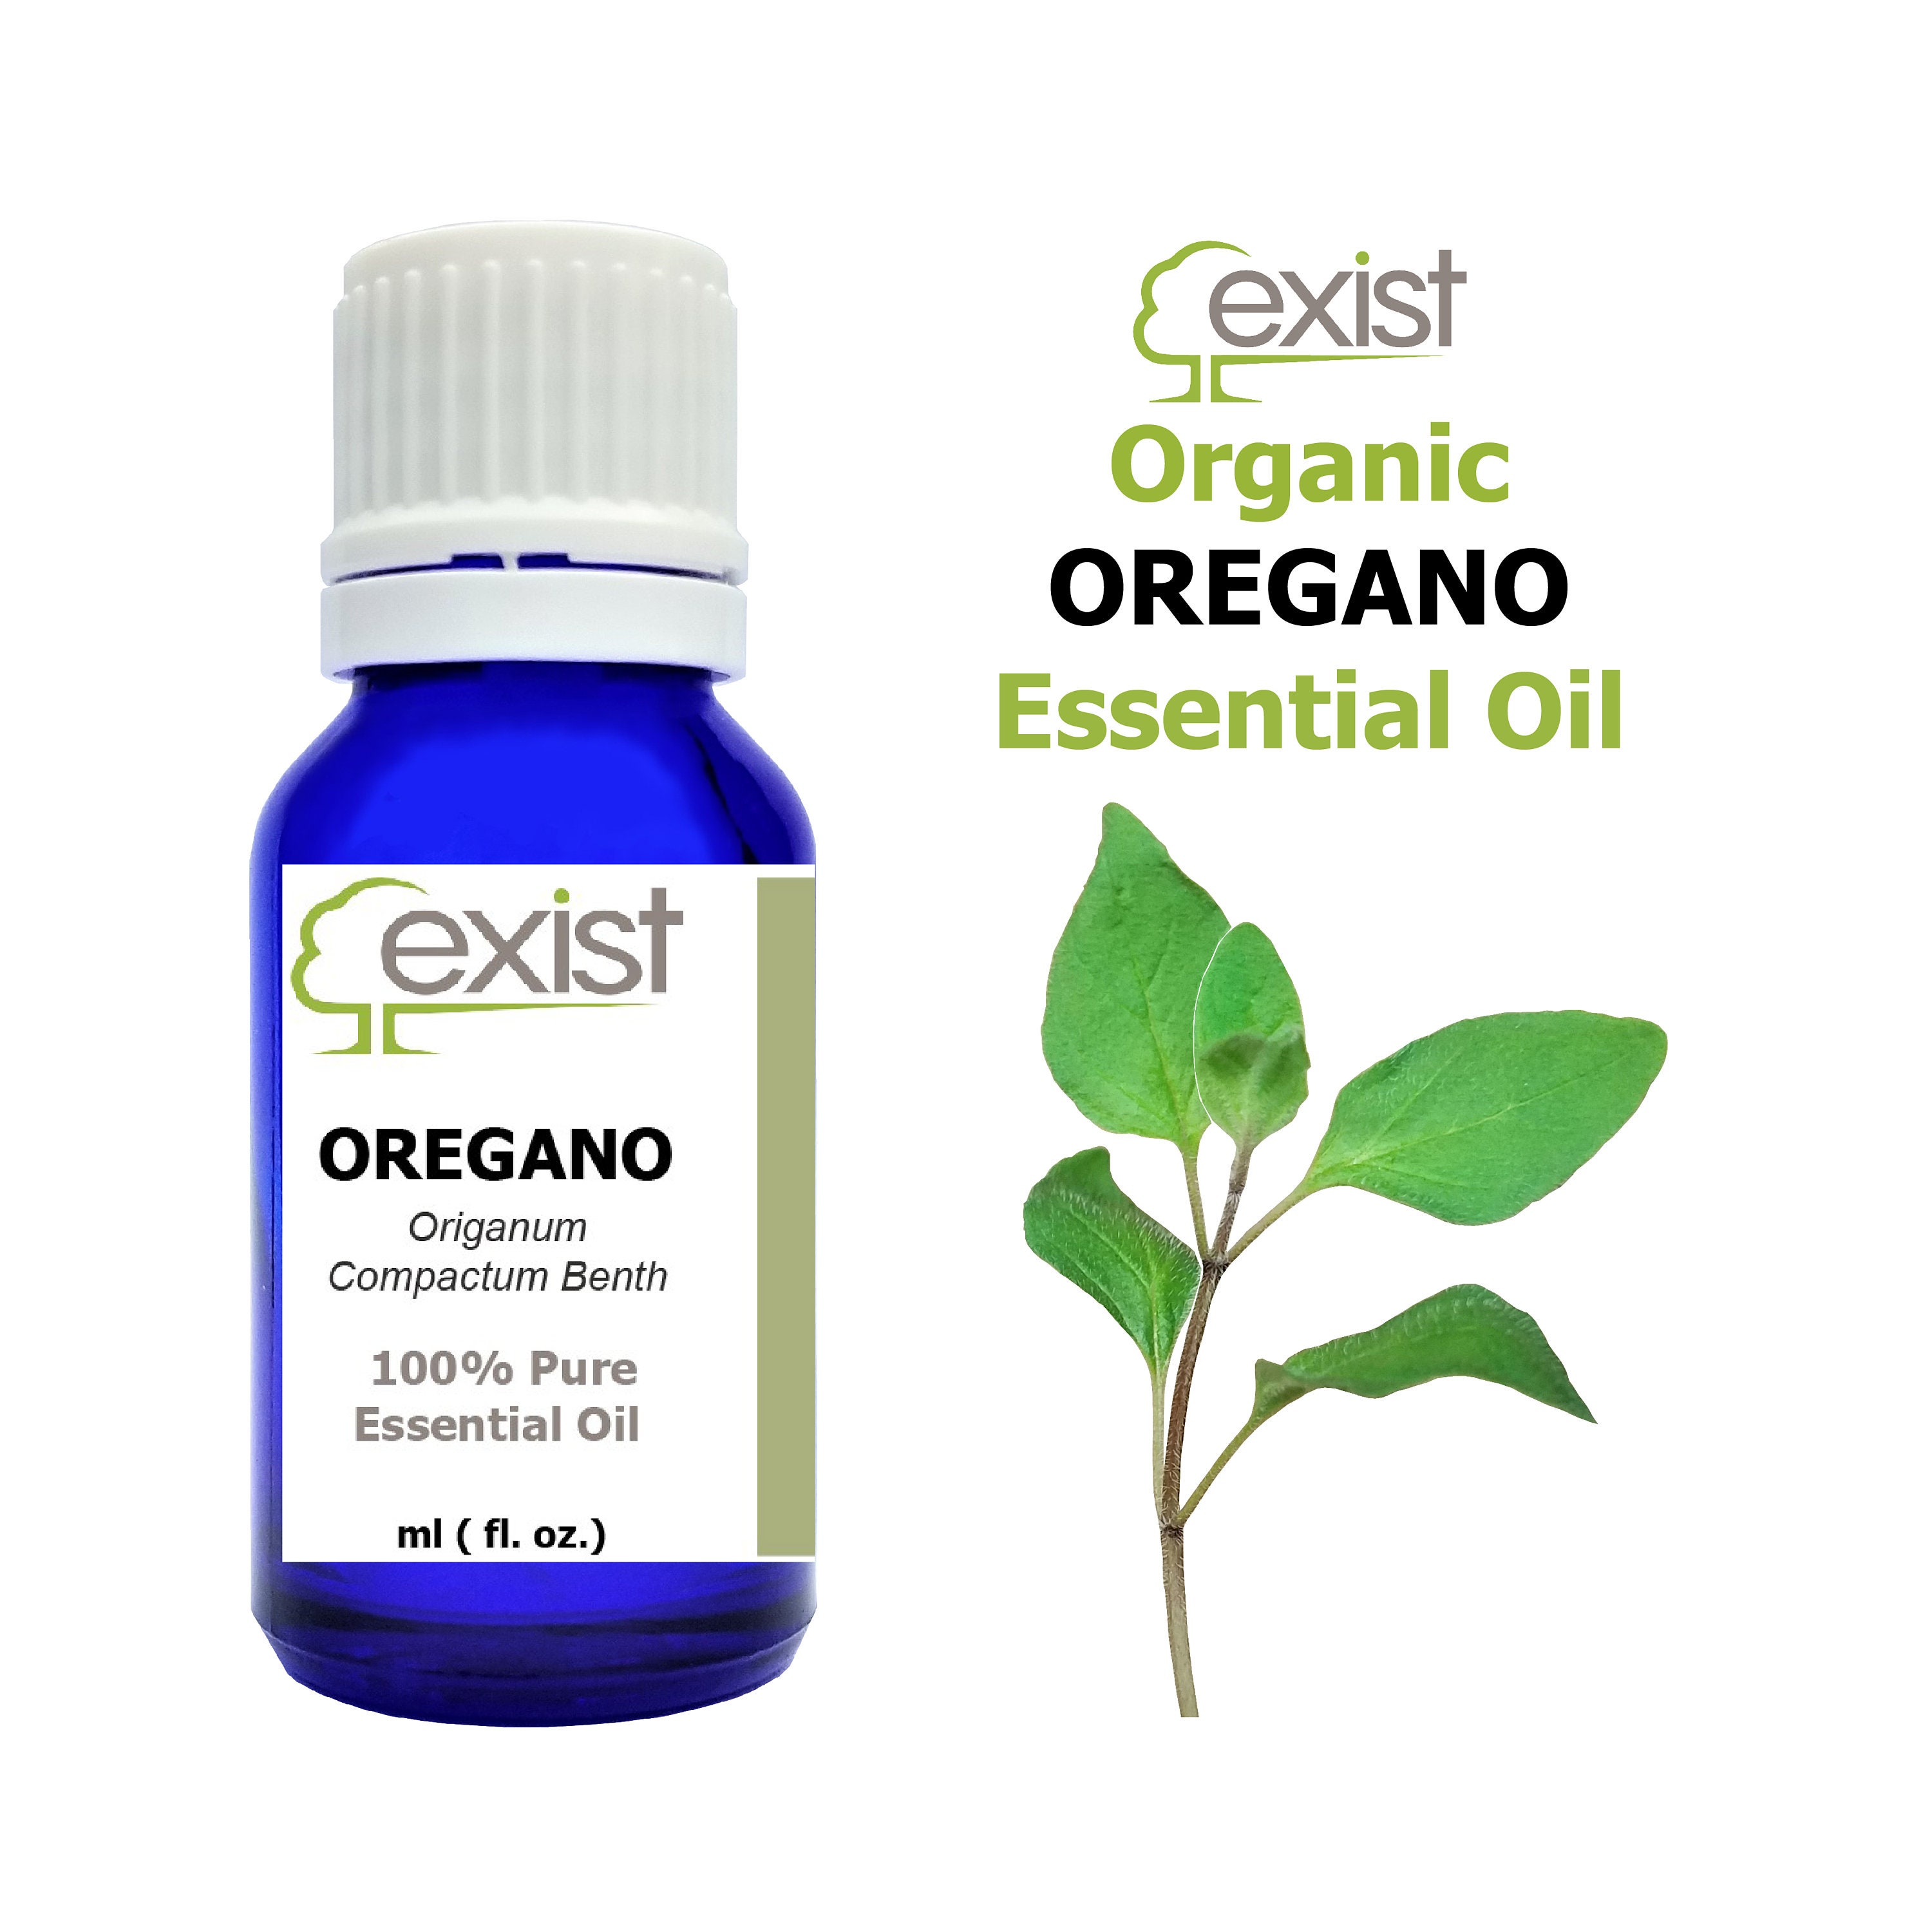 Oregano Essential Oil (Certified Organic)